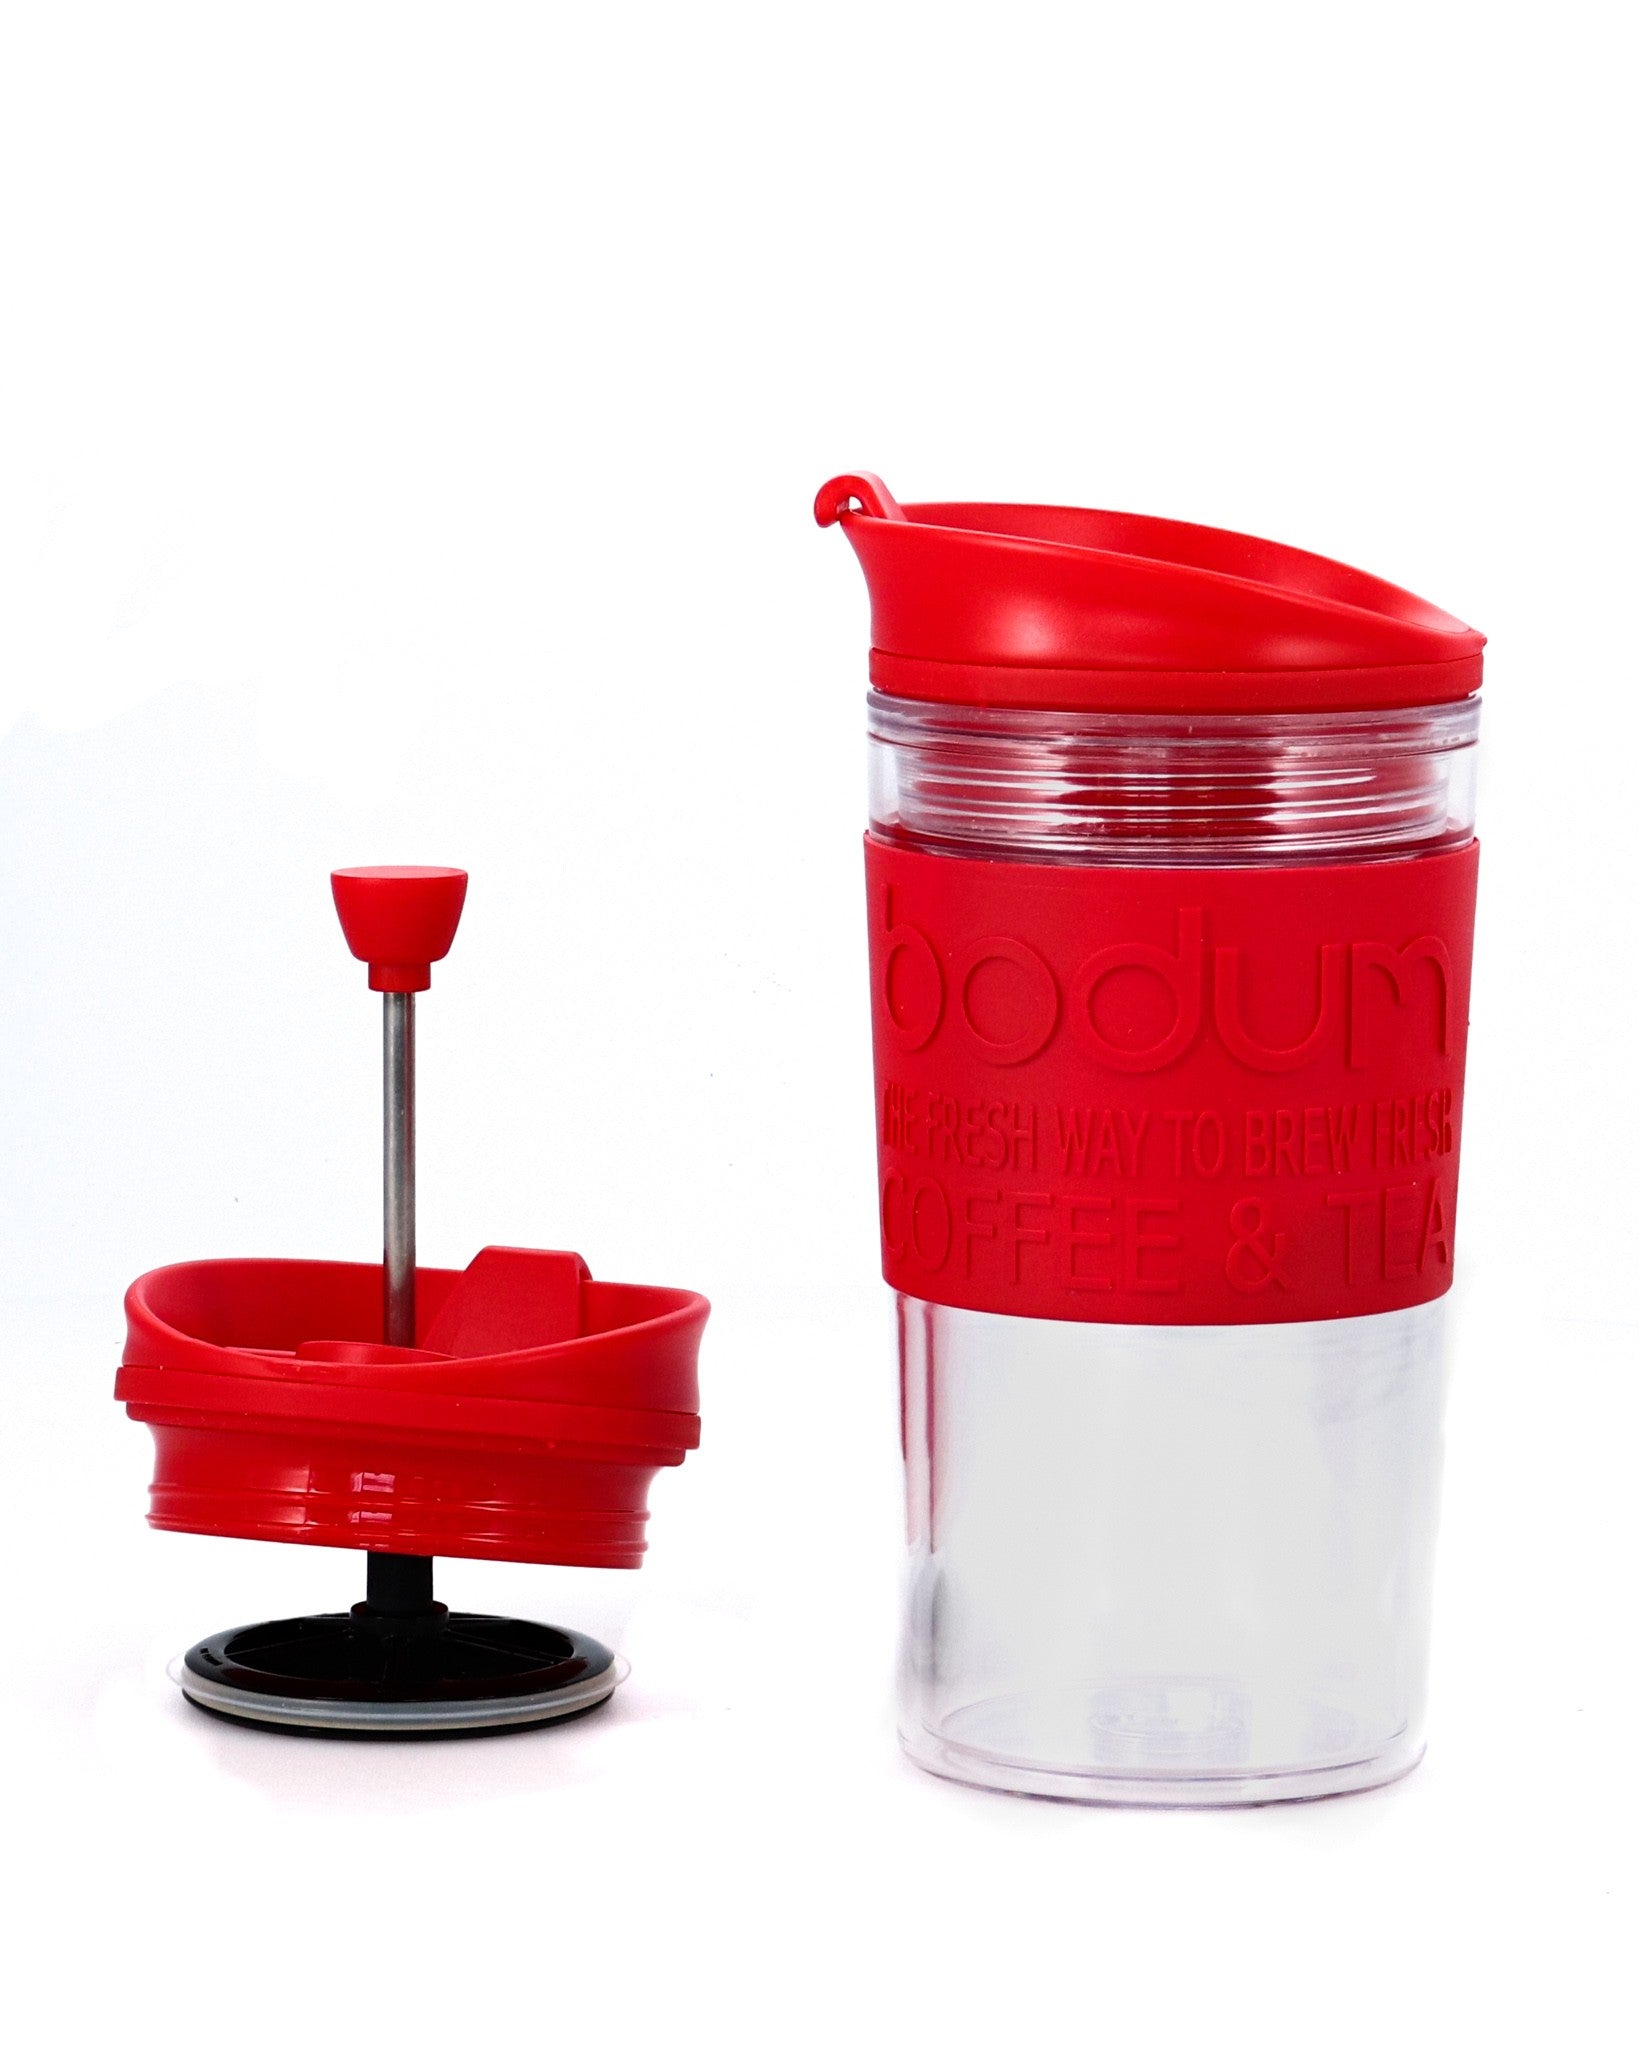 Bodum Travel Mug - Red